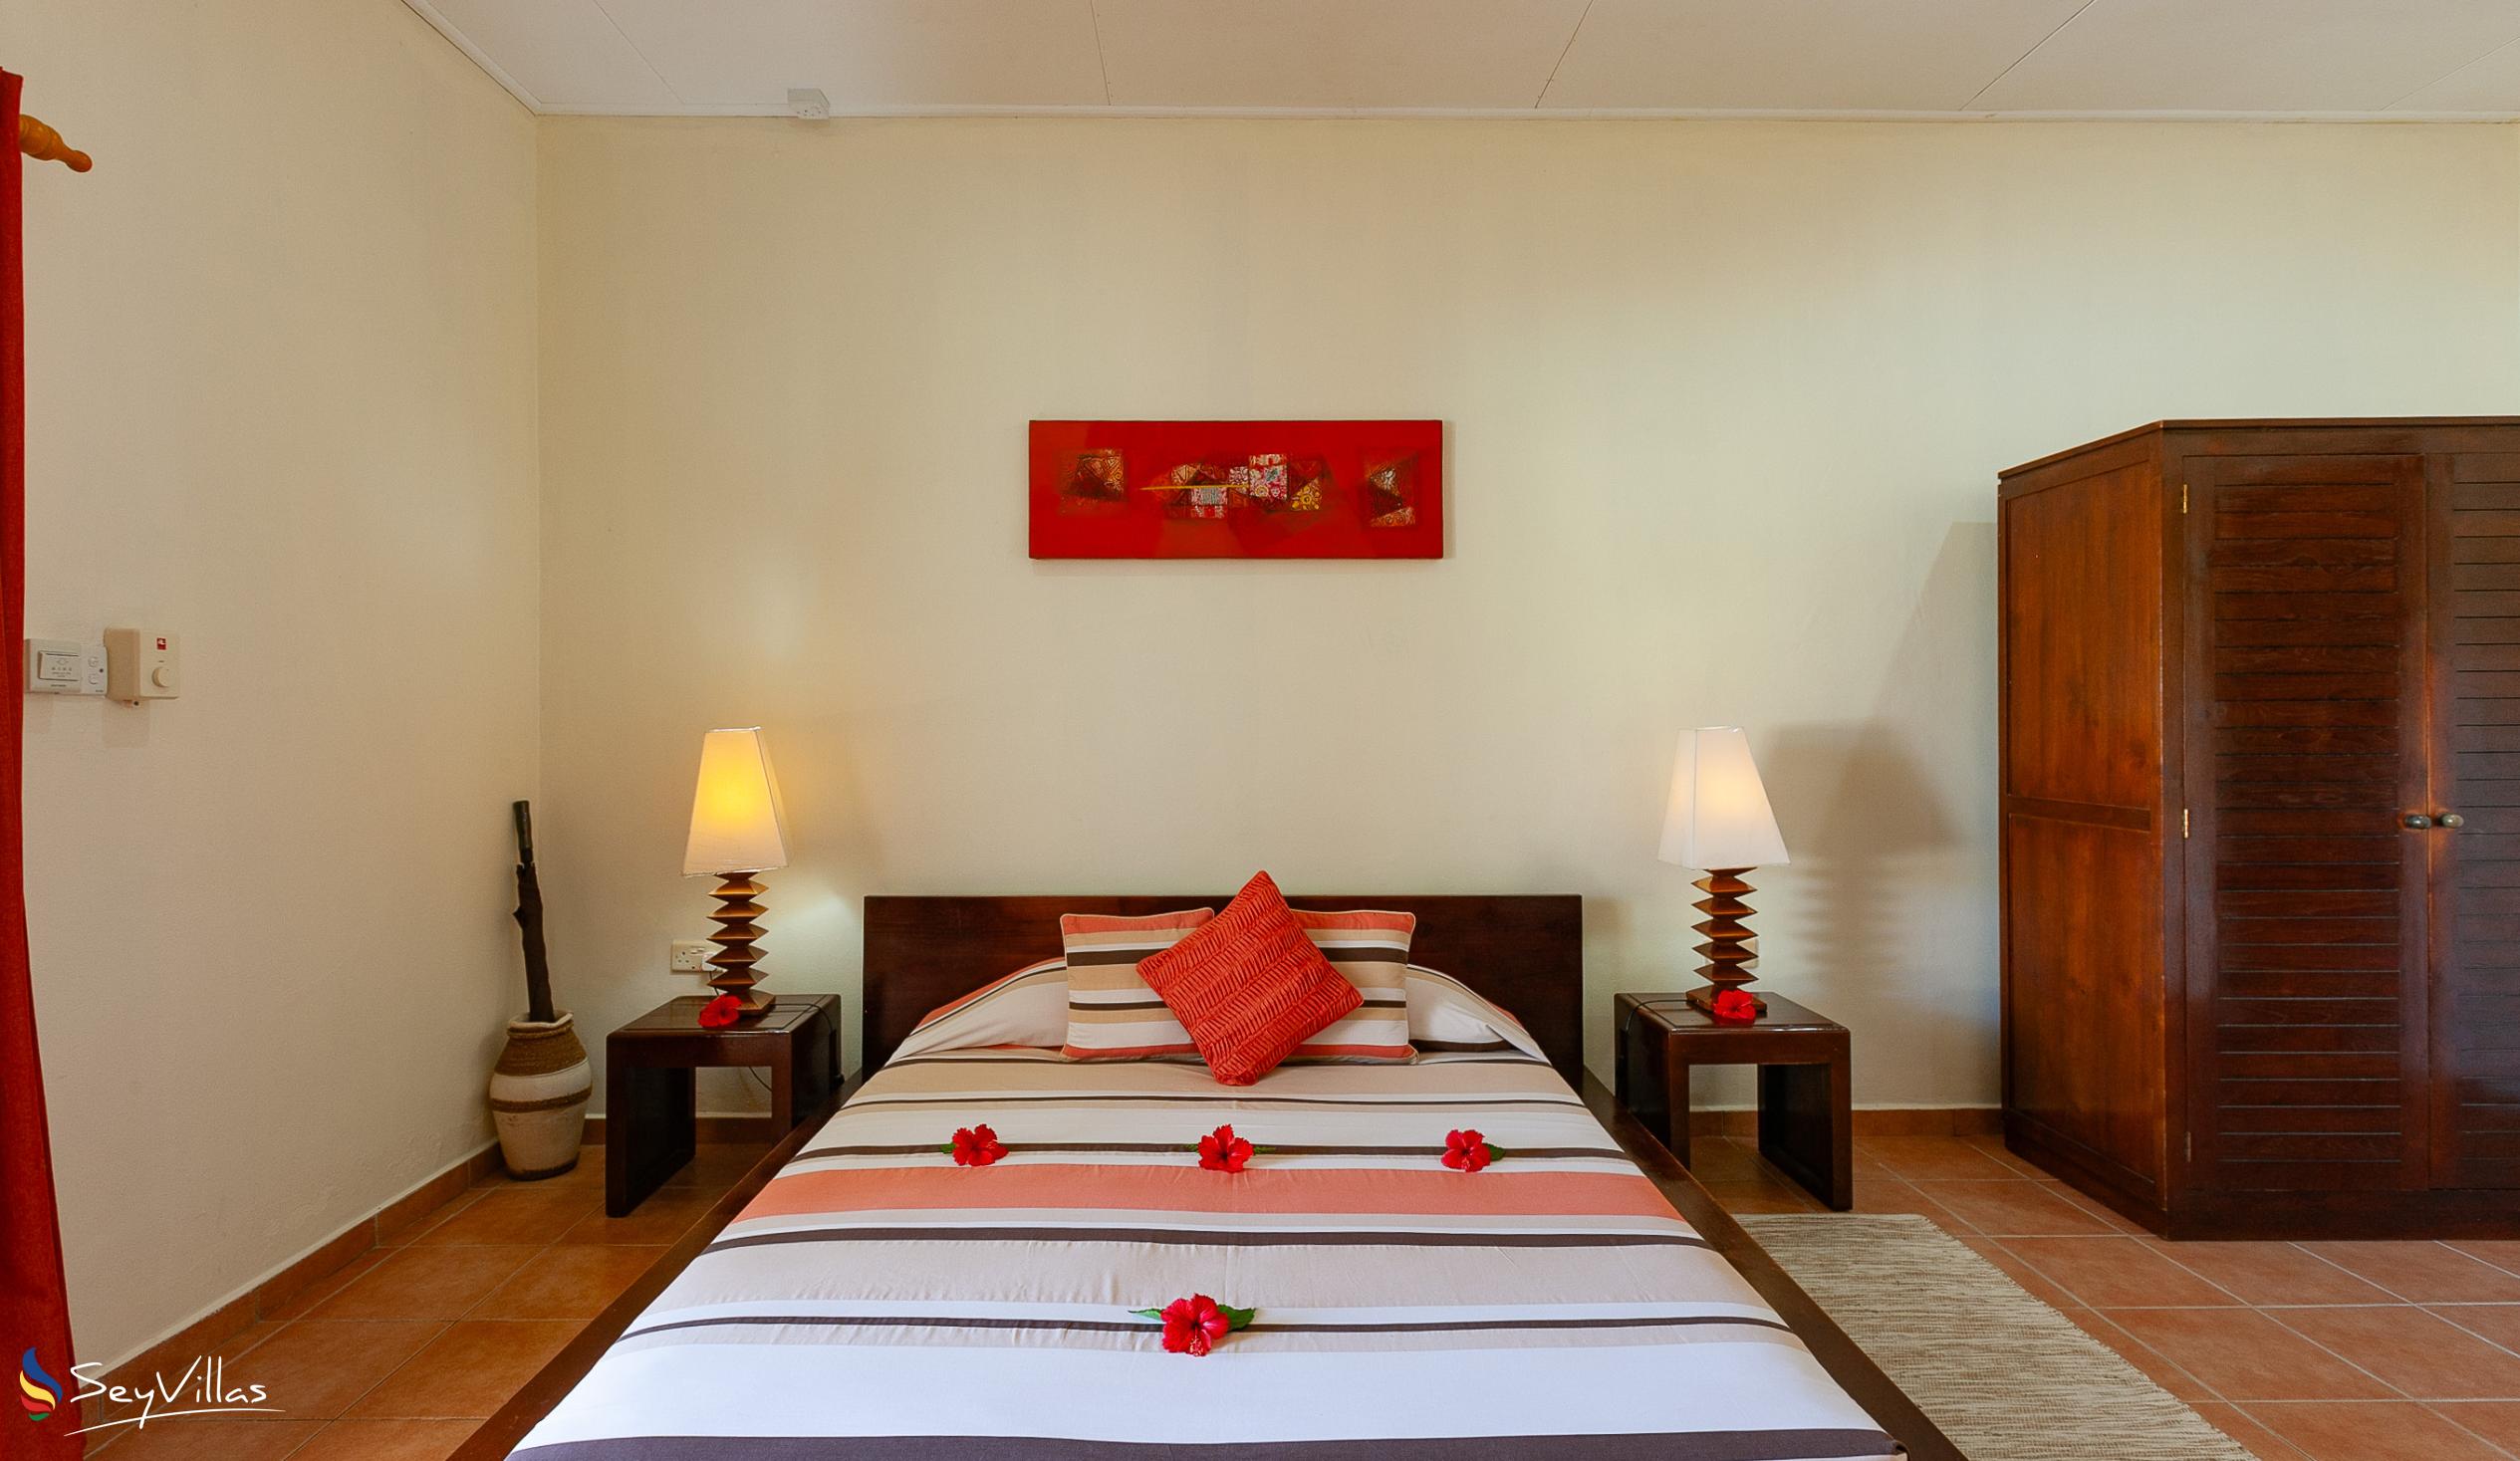 Photo 36: Britannia Hotel - Superior Family Room - Praslin (Seychelles)